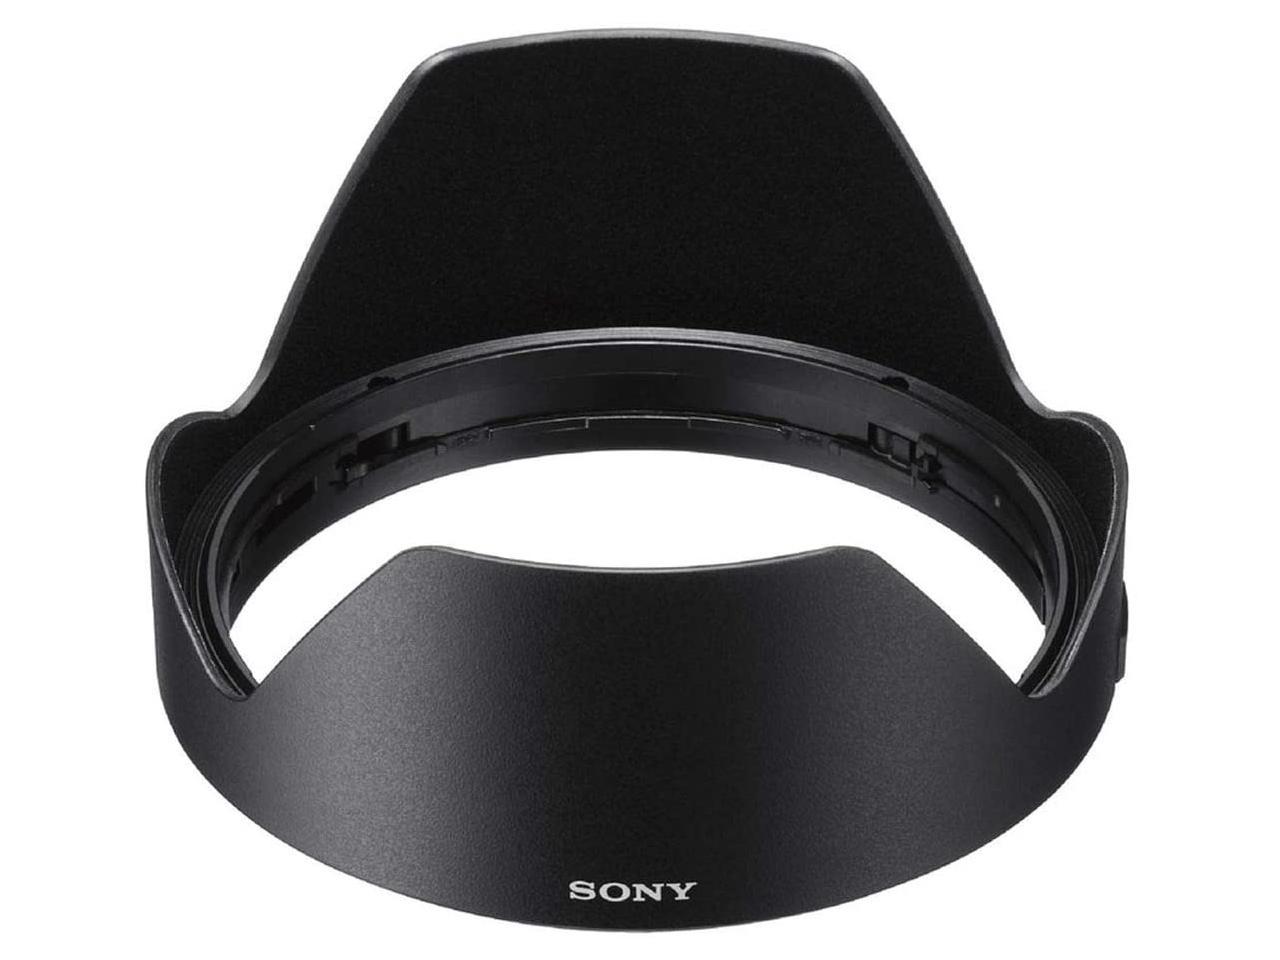 Sony FE 24-70mm f2.8 GM: Sony FE 24-70mm f/2.8 GM Lens G Master Series Pro Lens + AOM Pro Starter Bundle Kit - SEL2470GM - International Version